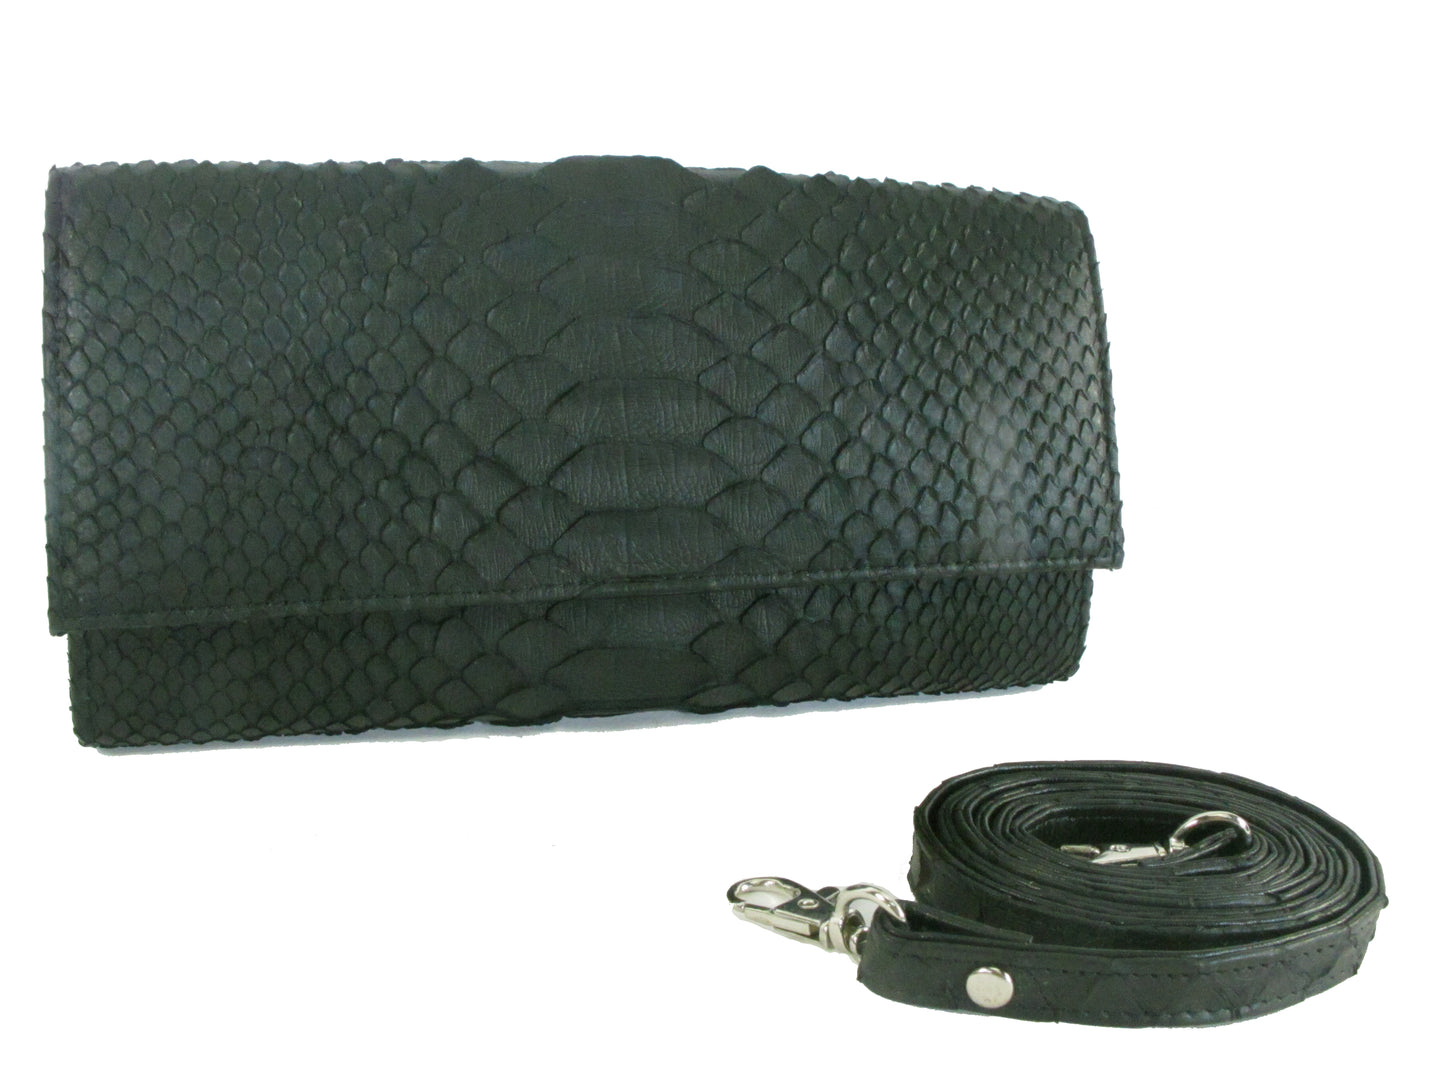 PELGIO Genuine Python Skin Leather Women's Shoulder Bag Clutch Wallet Purse